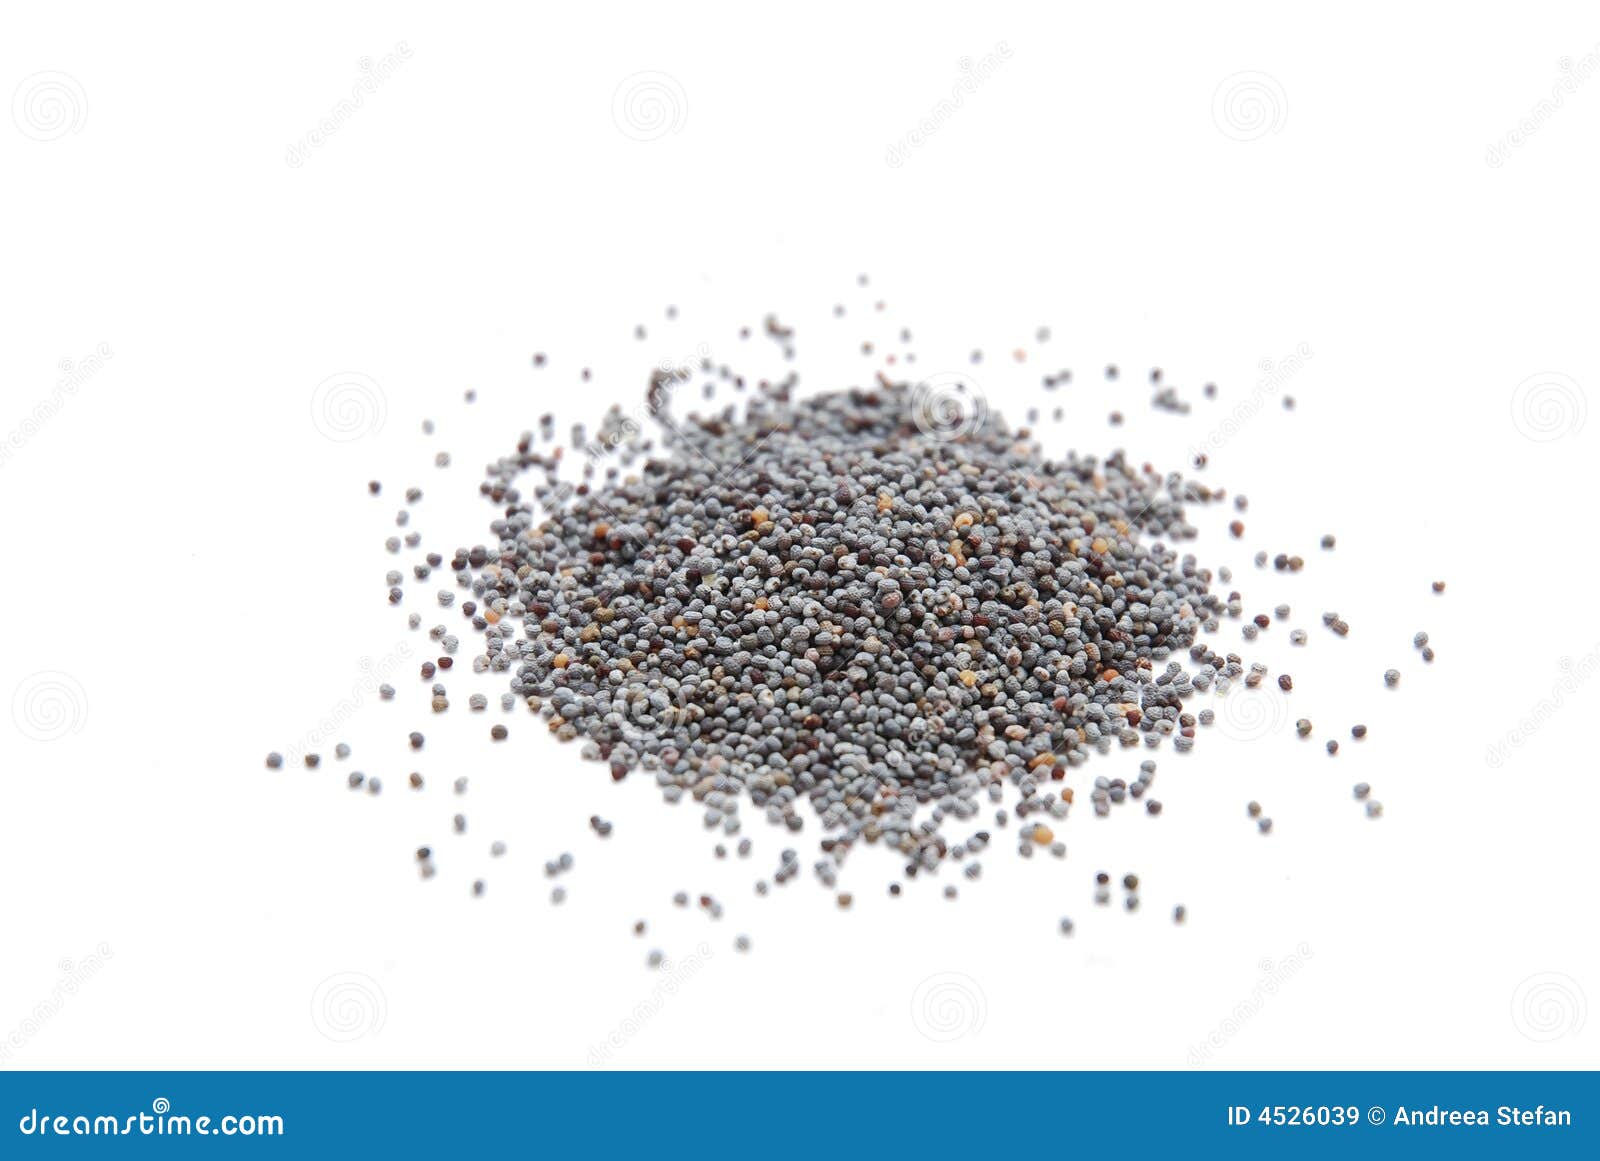 poppy seeds